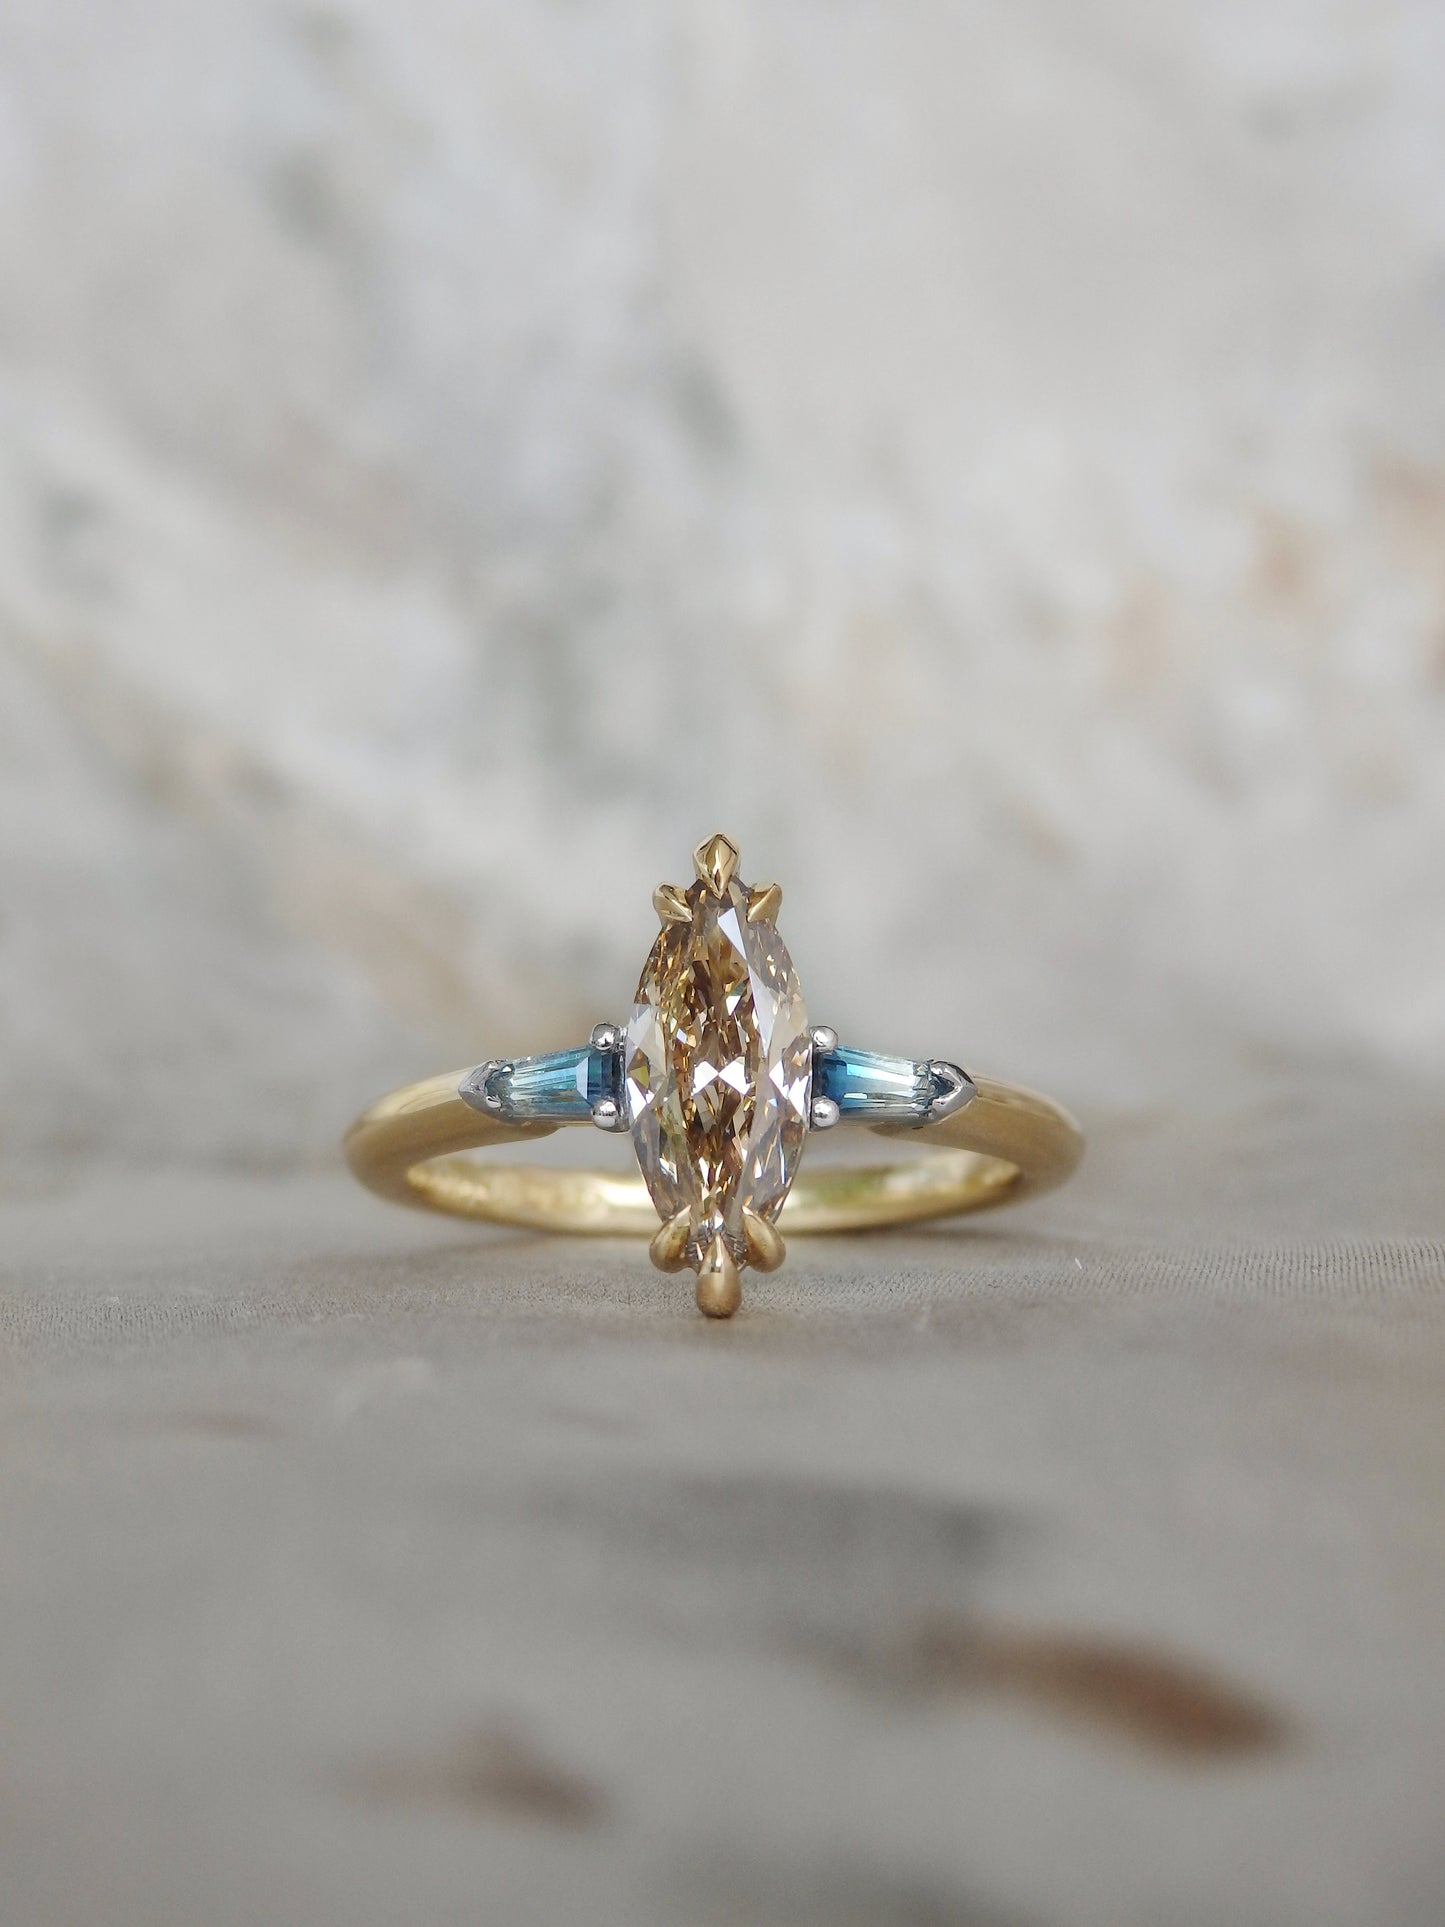 Driftwood 1 - “Cellito” Argyle Marquise Champagne Diamond & Ombré Australian Parti Sapphire Trilogy Engagement Ring